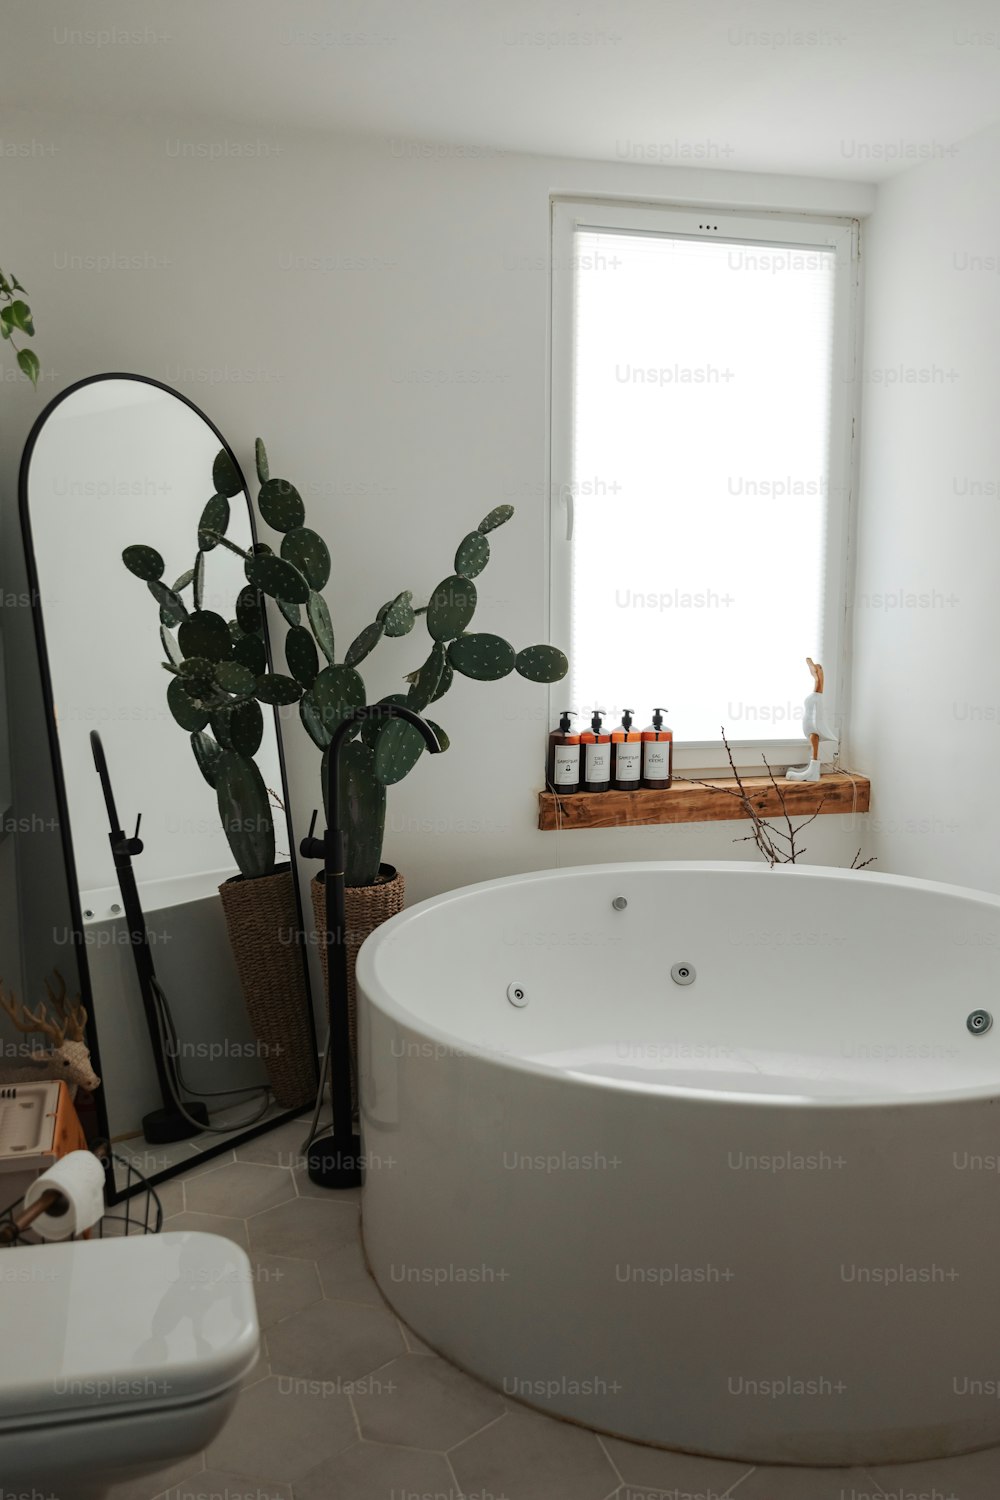 a large white bath tub sitting next to a window